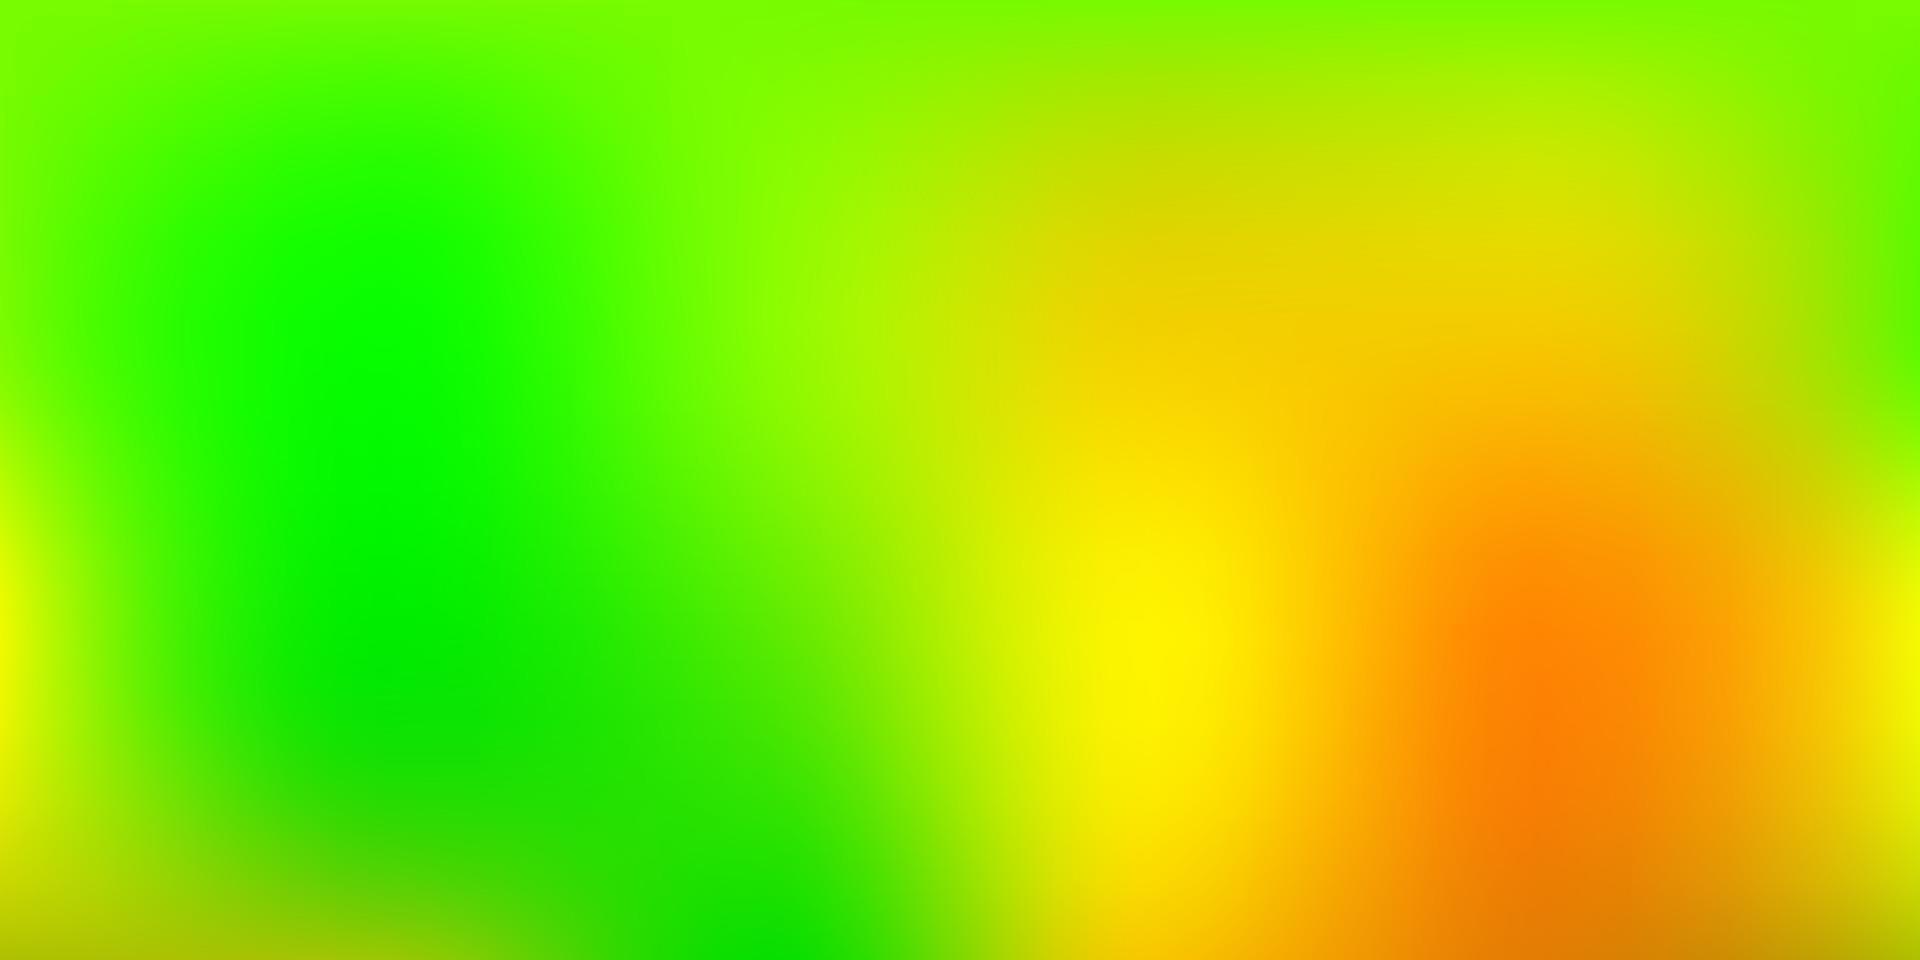 Dark Green, Yellow vector blurred background.